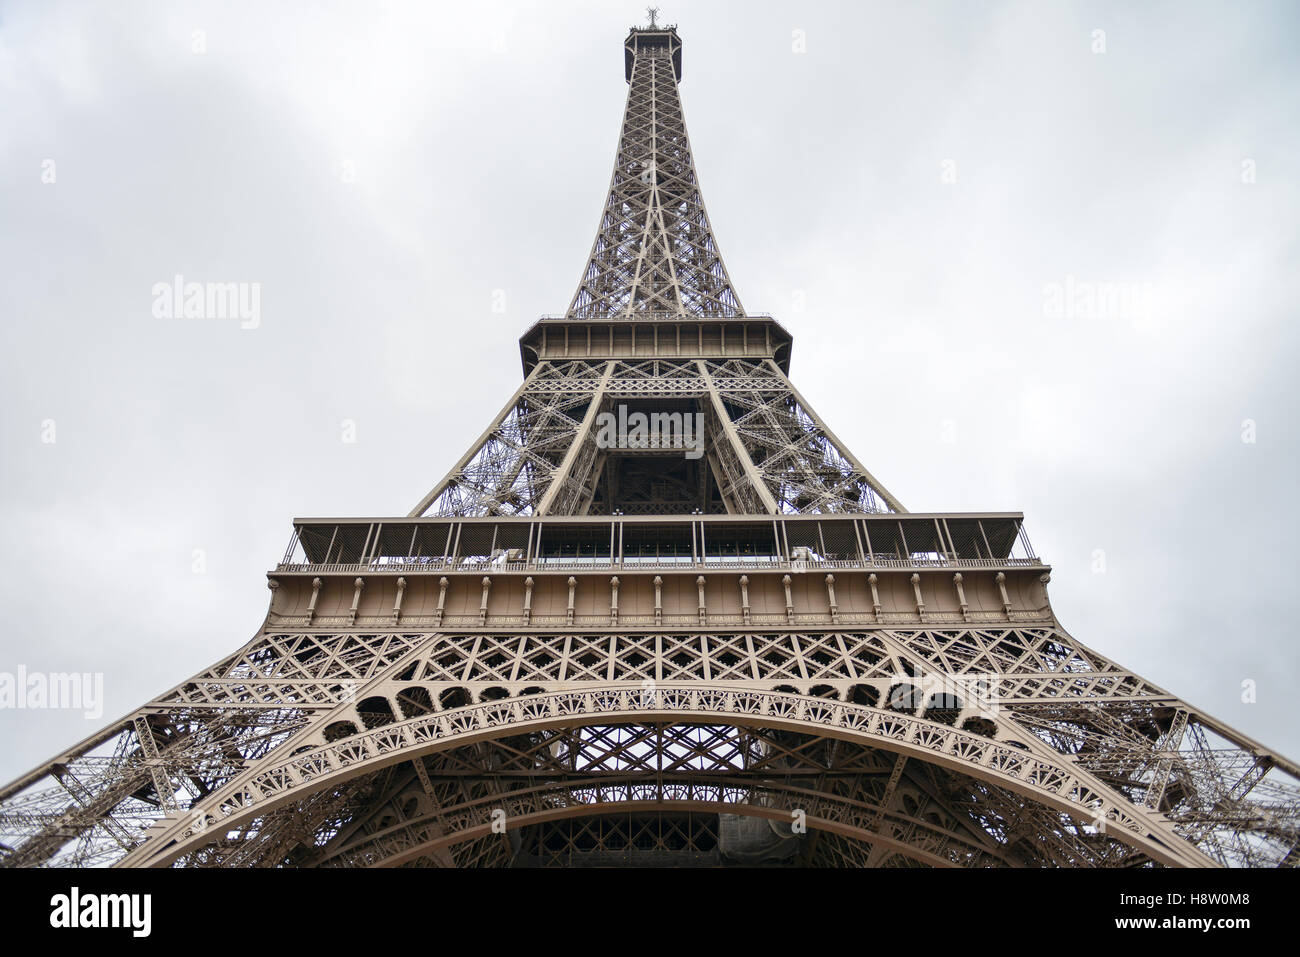 Eiffel Tower, Paris, France, Europe - seen from below Stock Photo